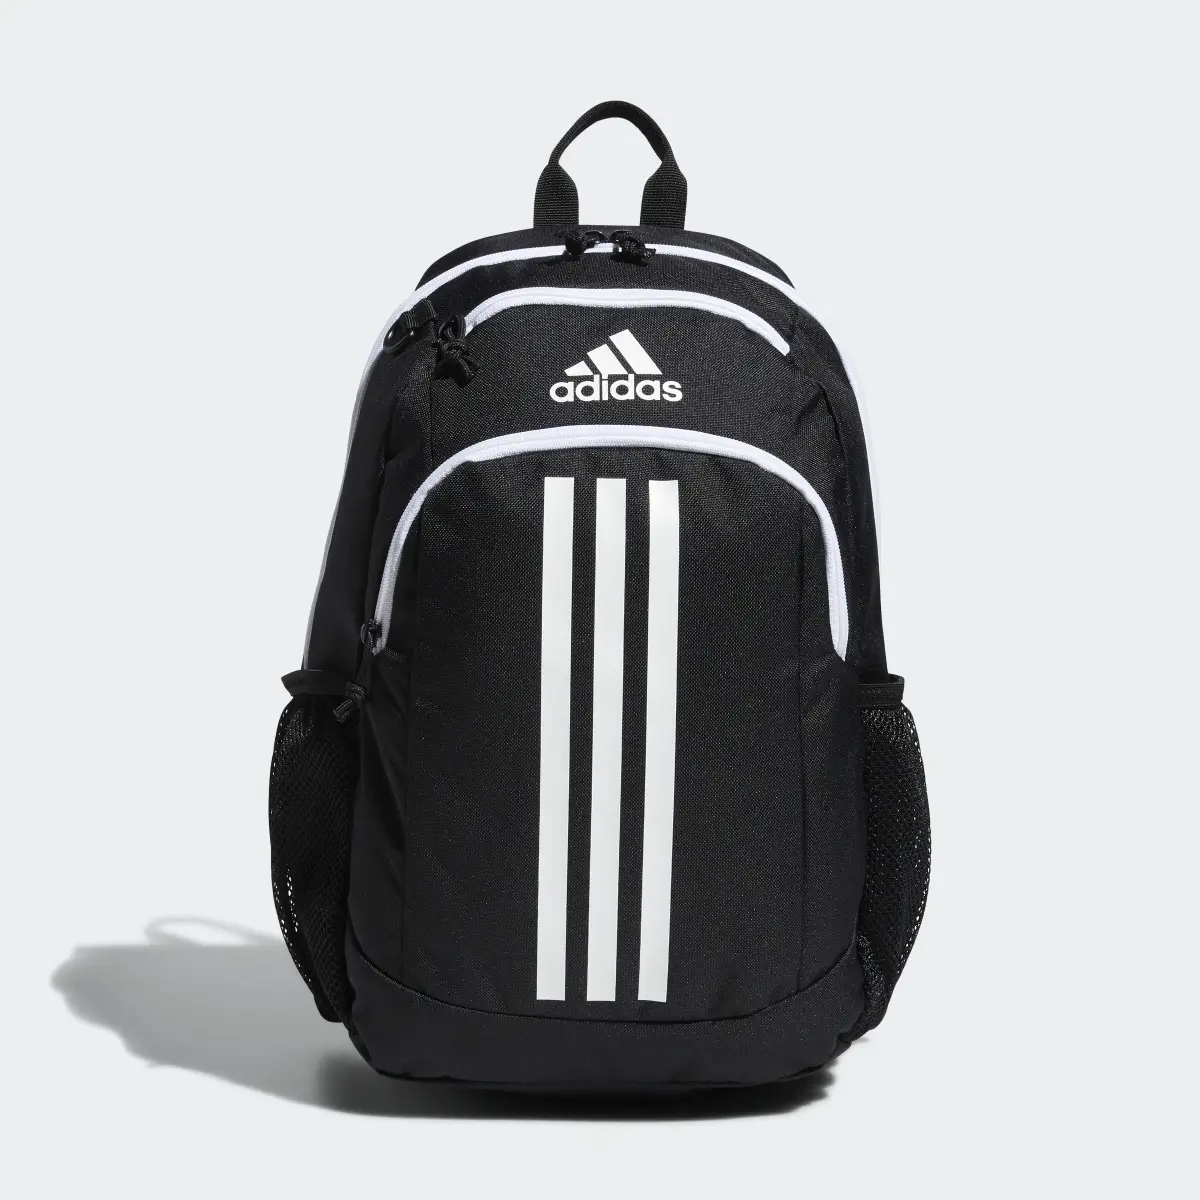 Adidas Creator Backpack. 2